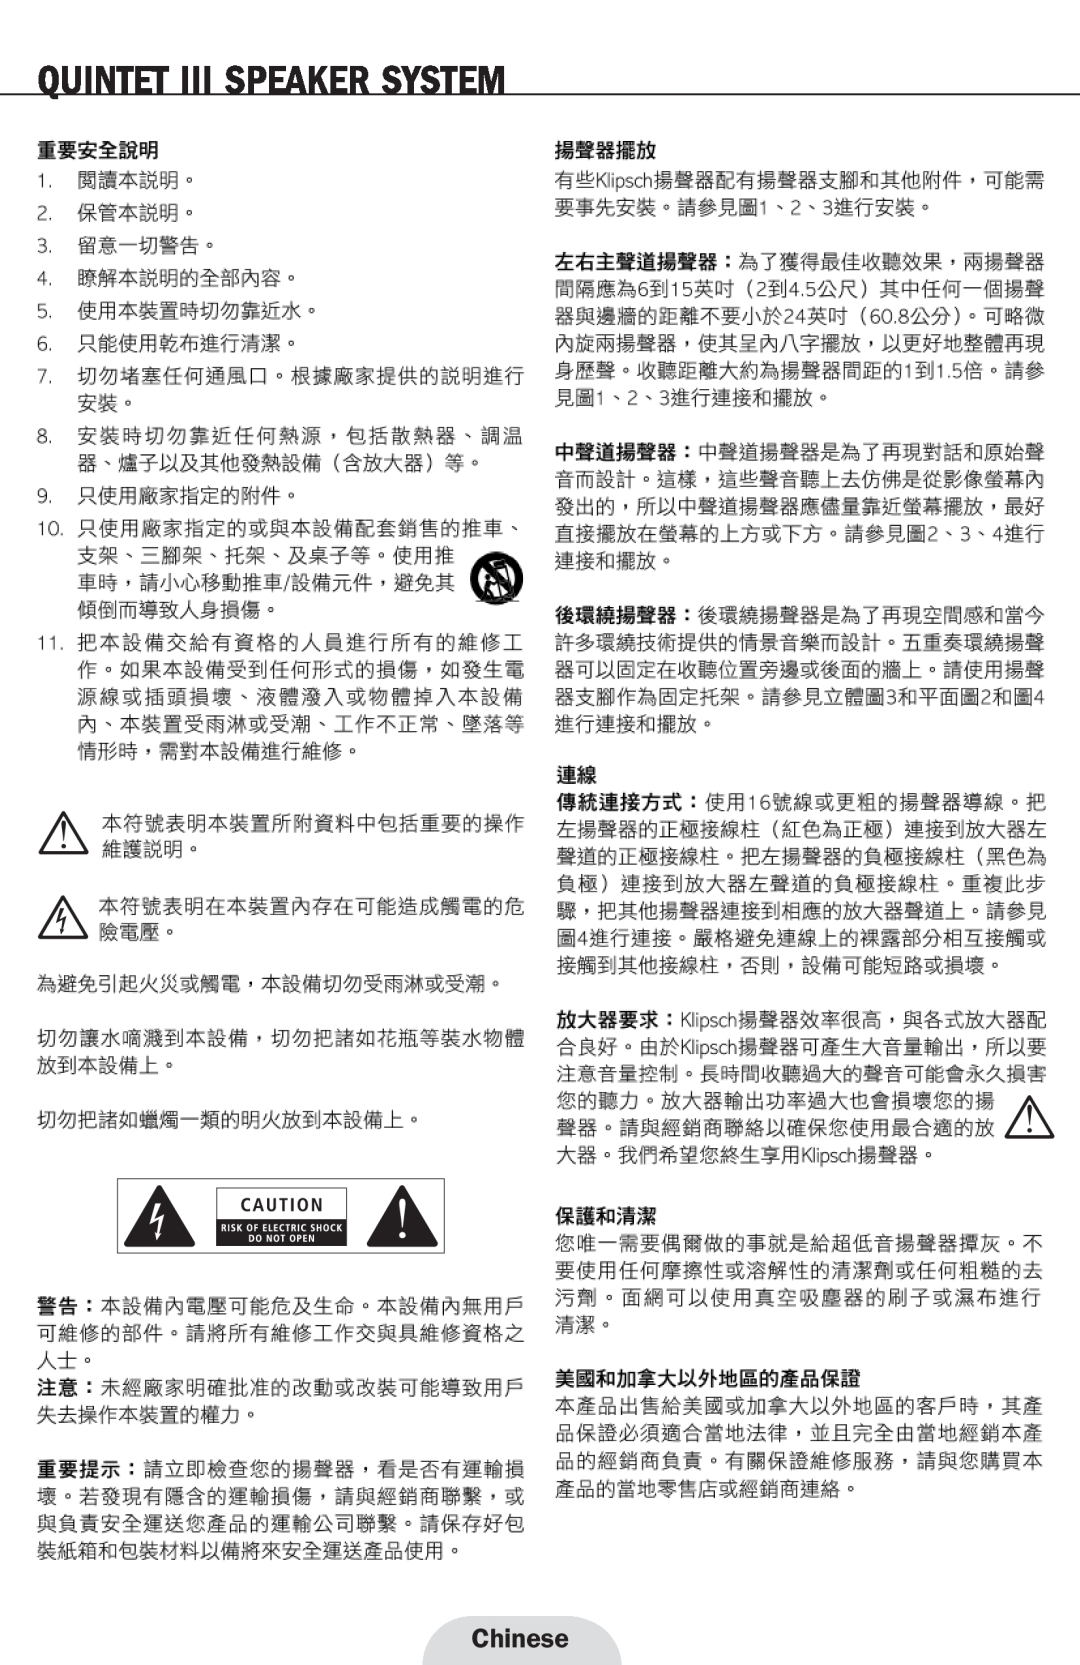 Klipsch Quintet III manual Chinese, Quintet Iii Speaker System 